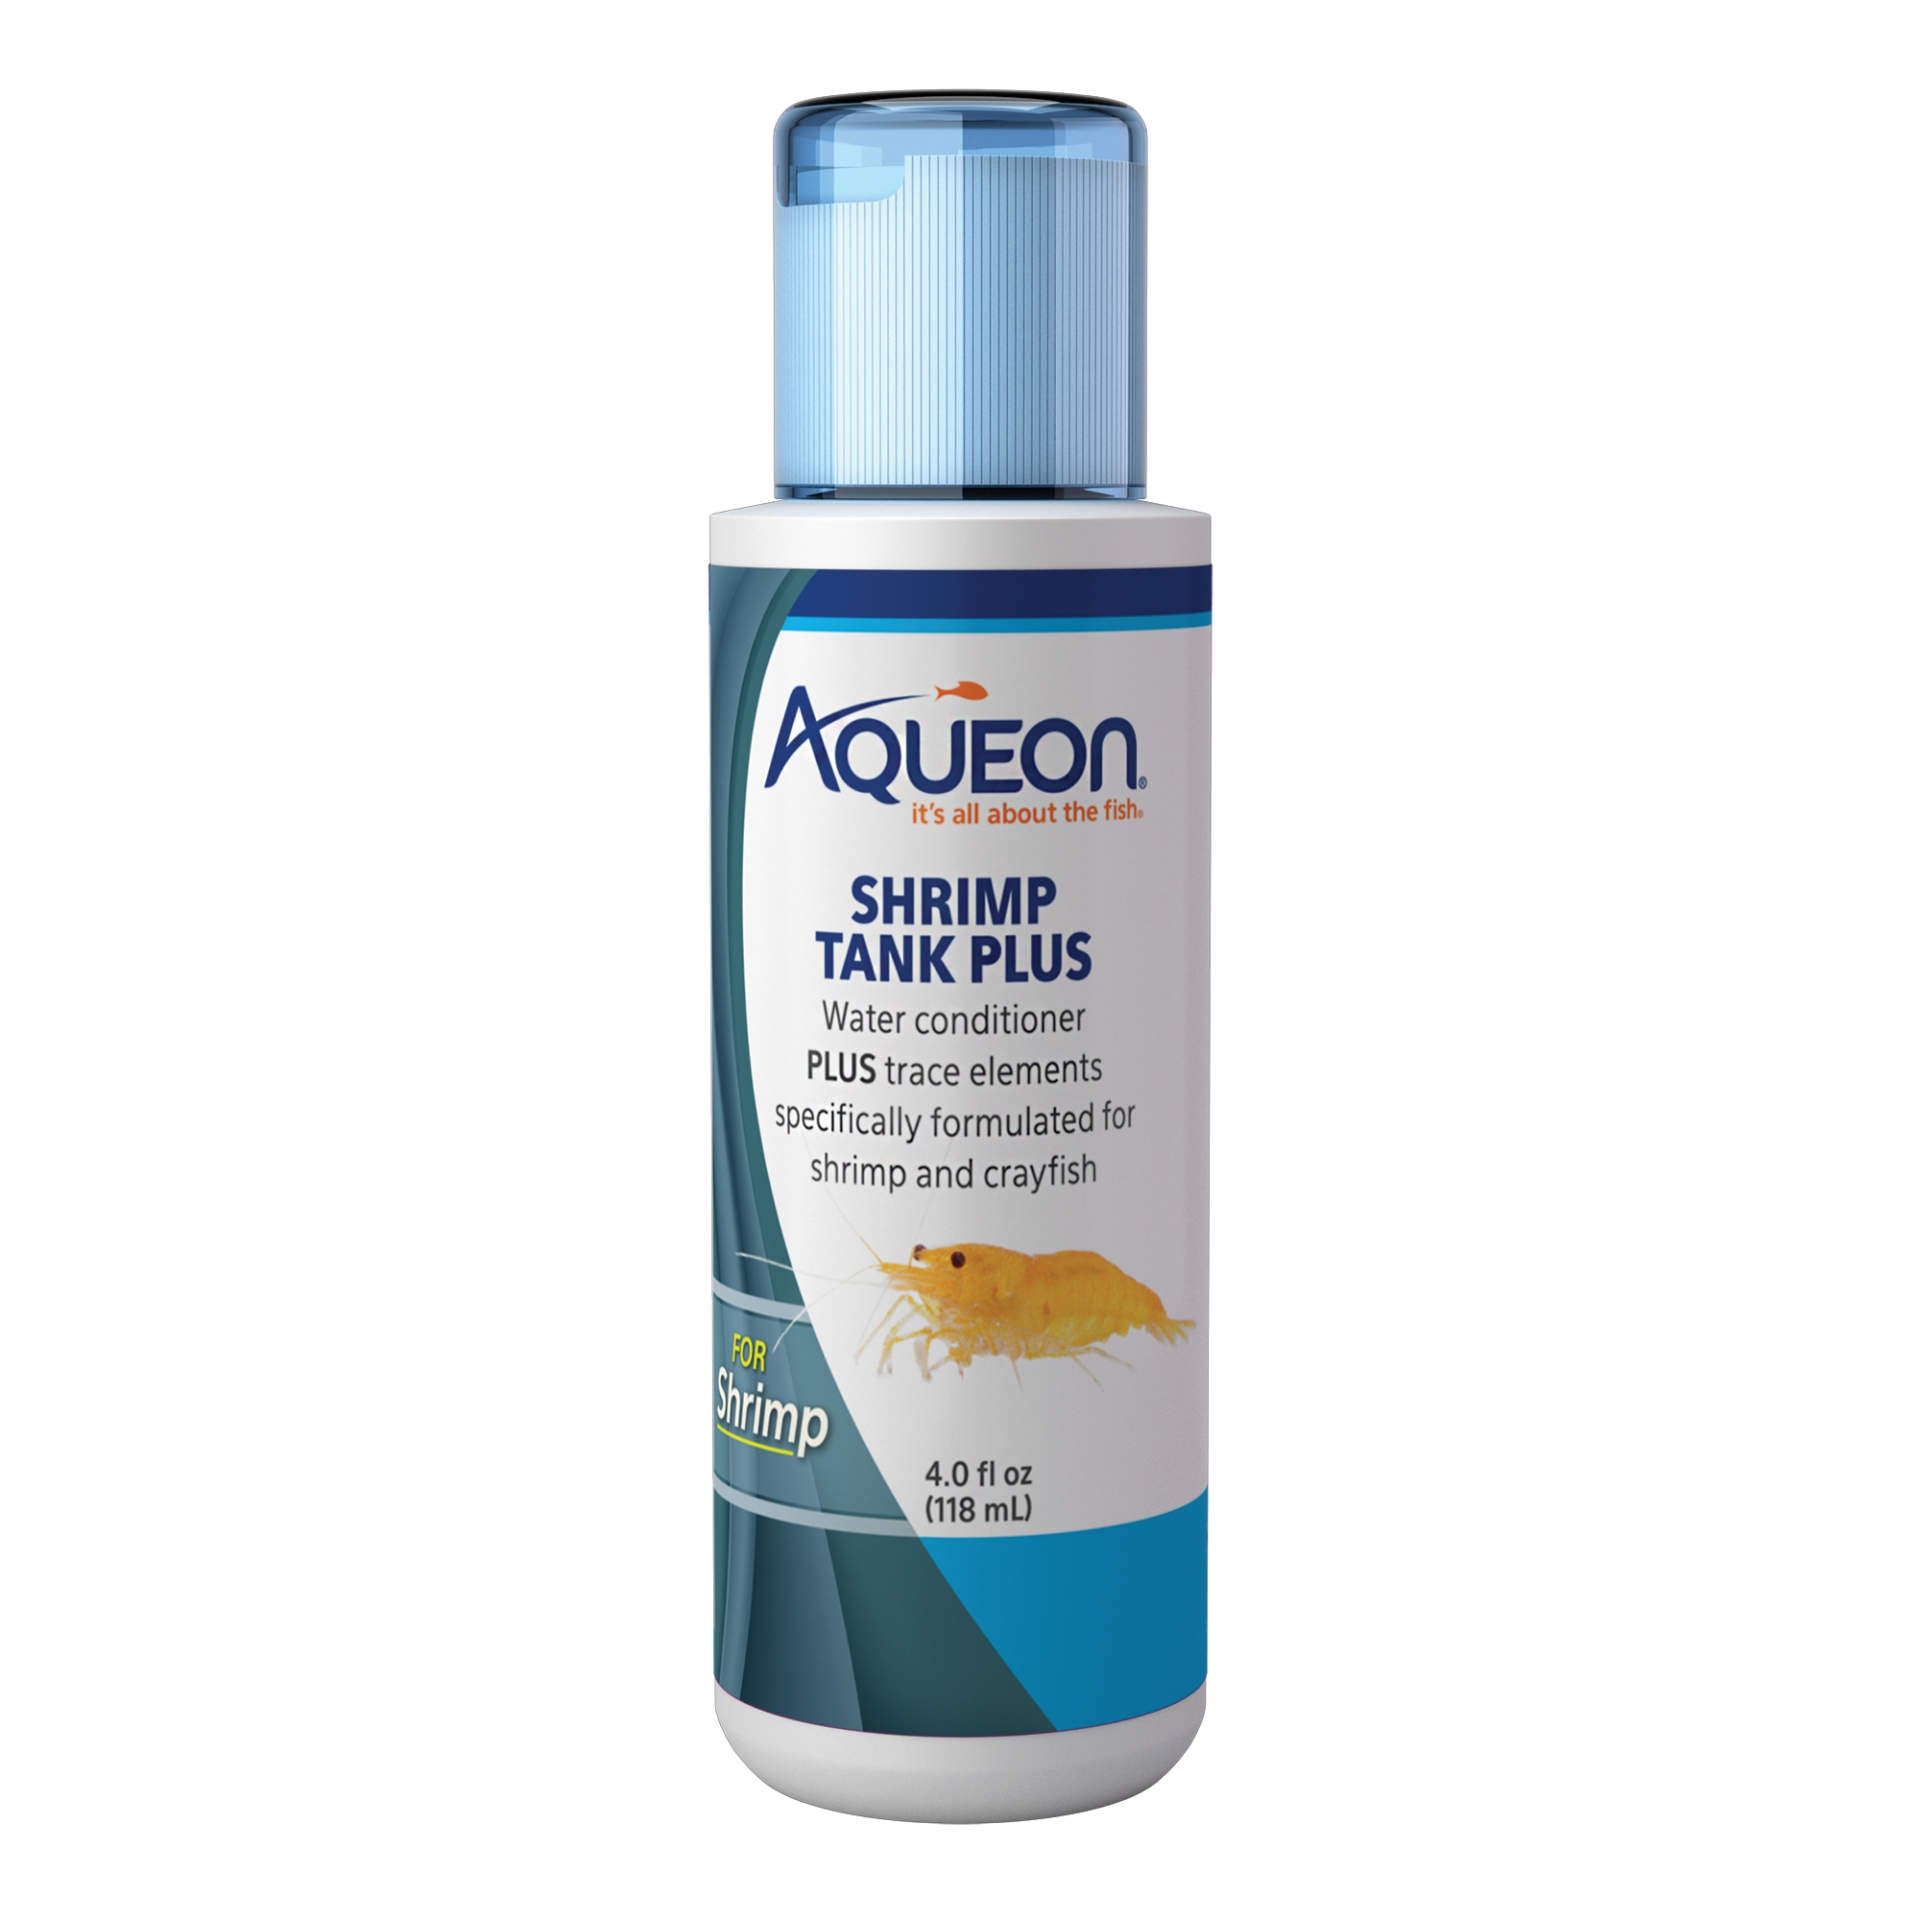 Aqueon Shrimp Tank Plus